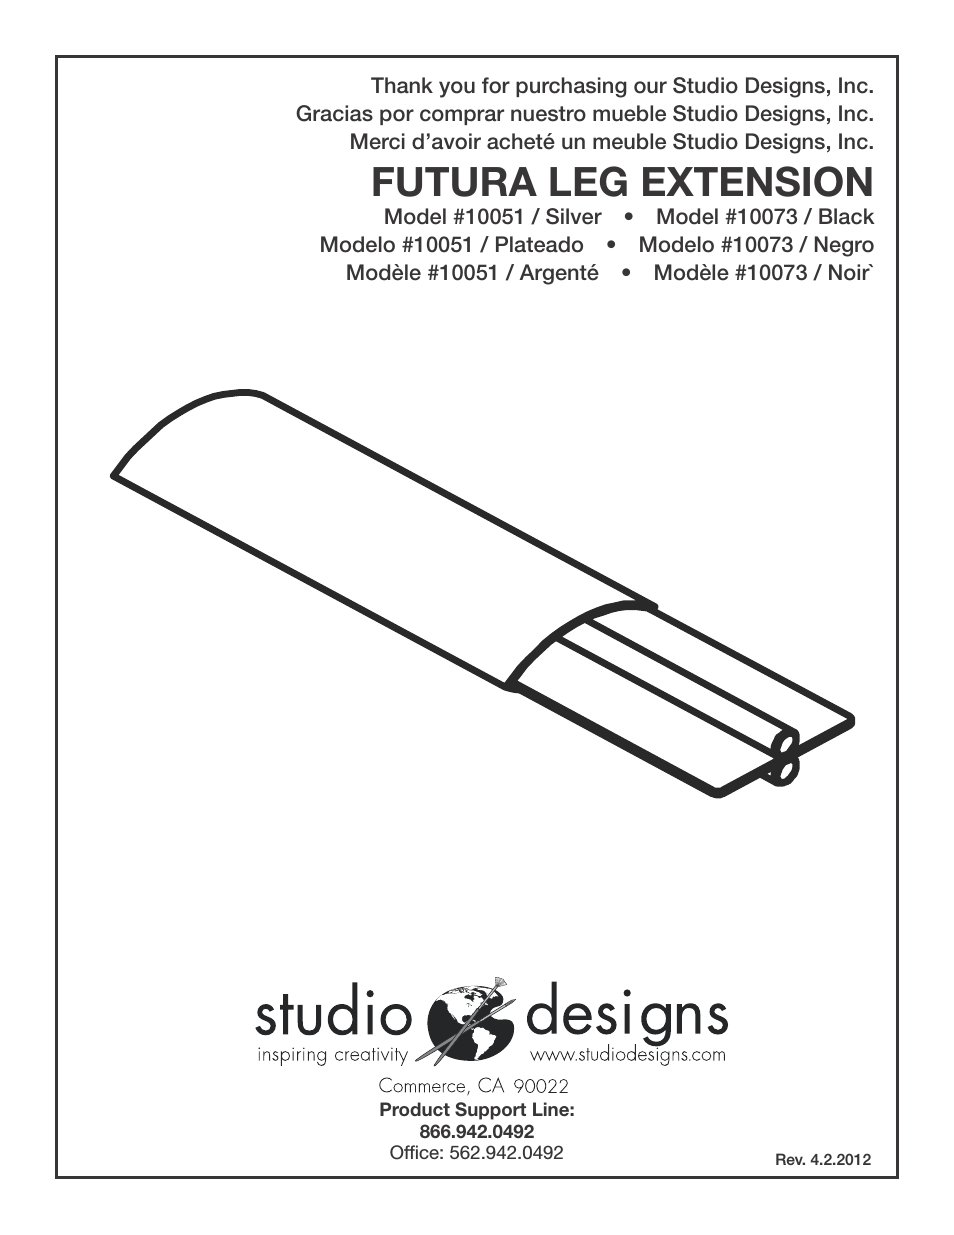 Futura Leg Extension